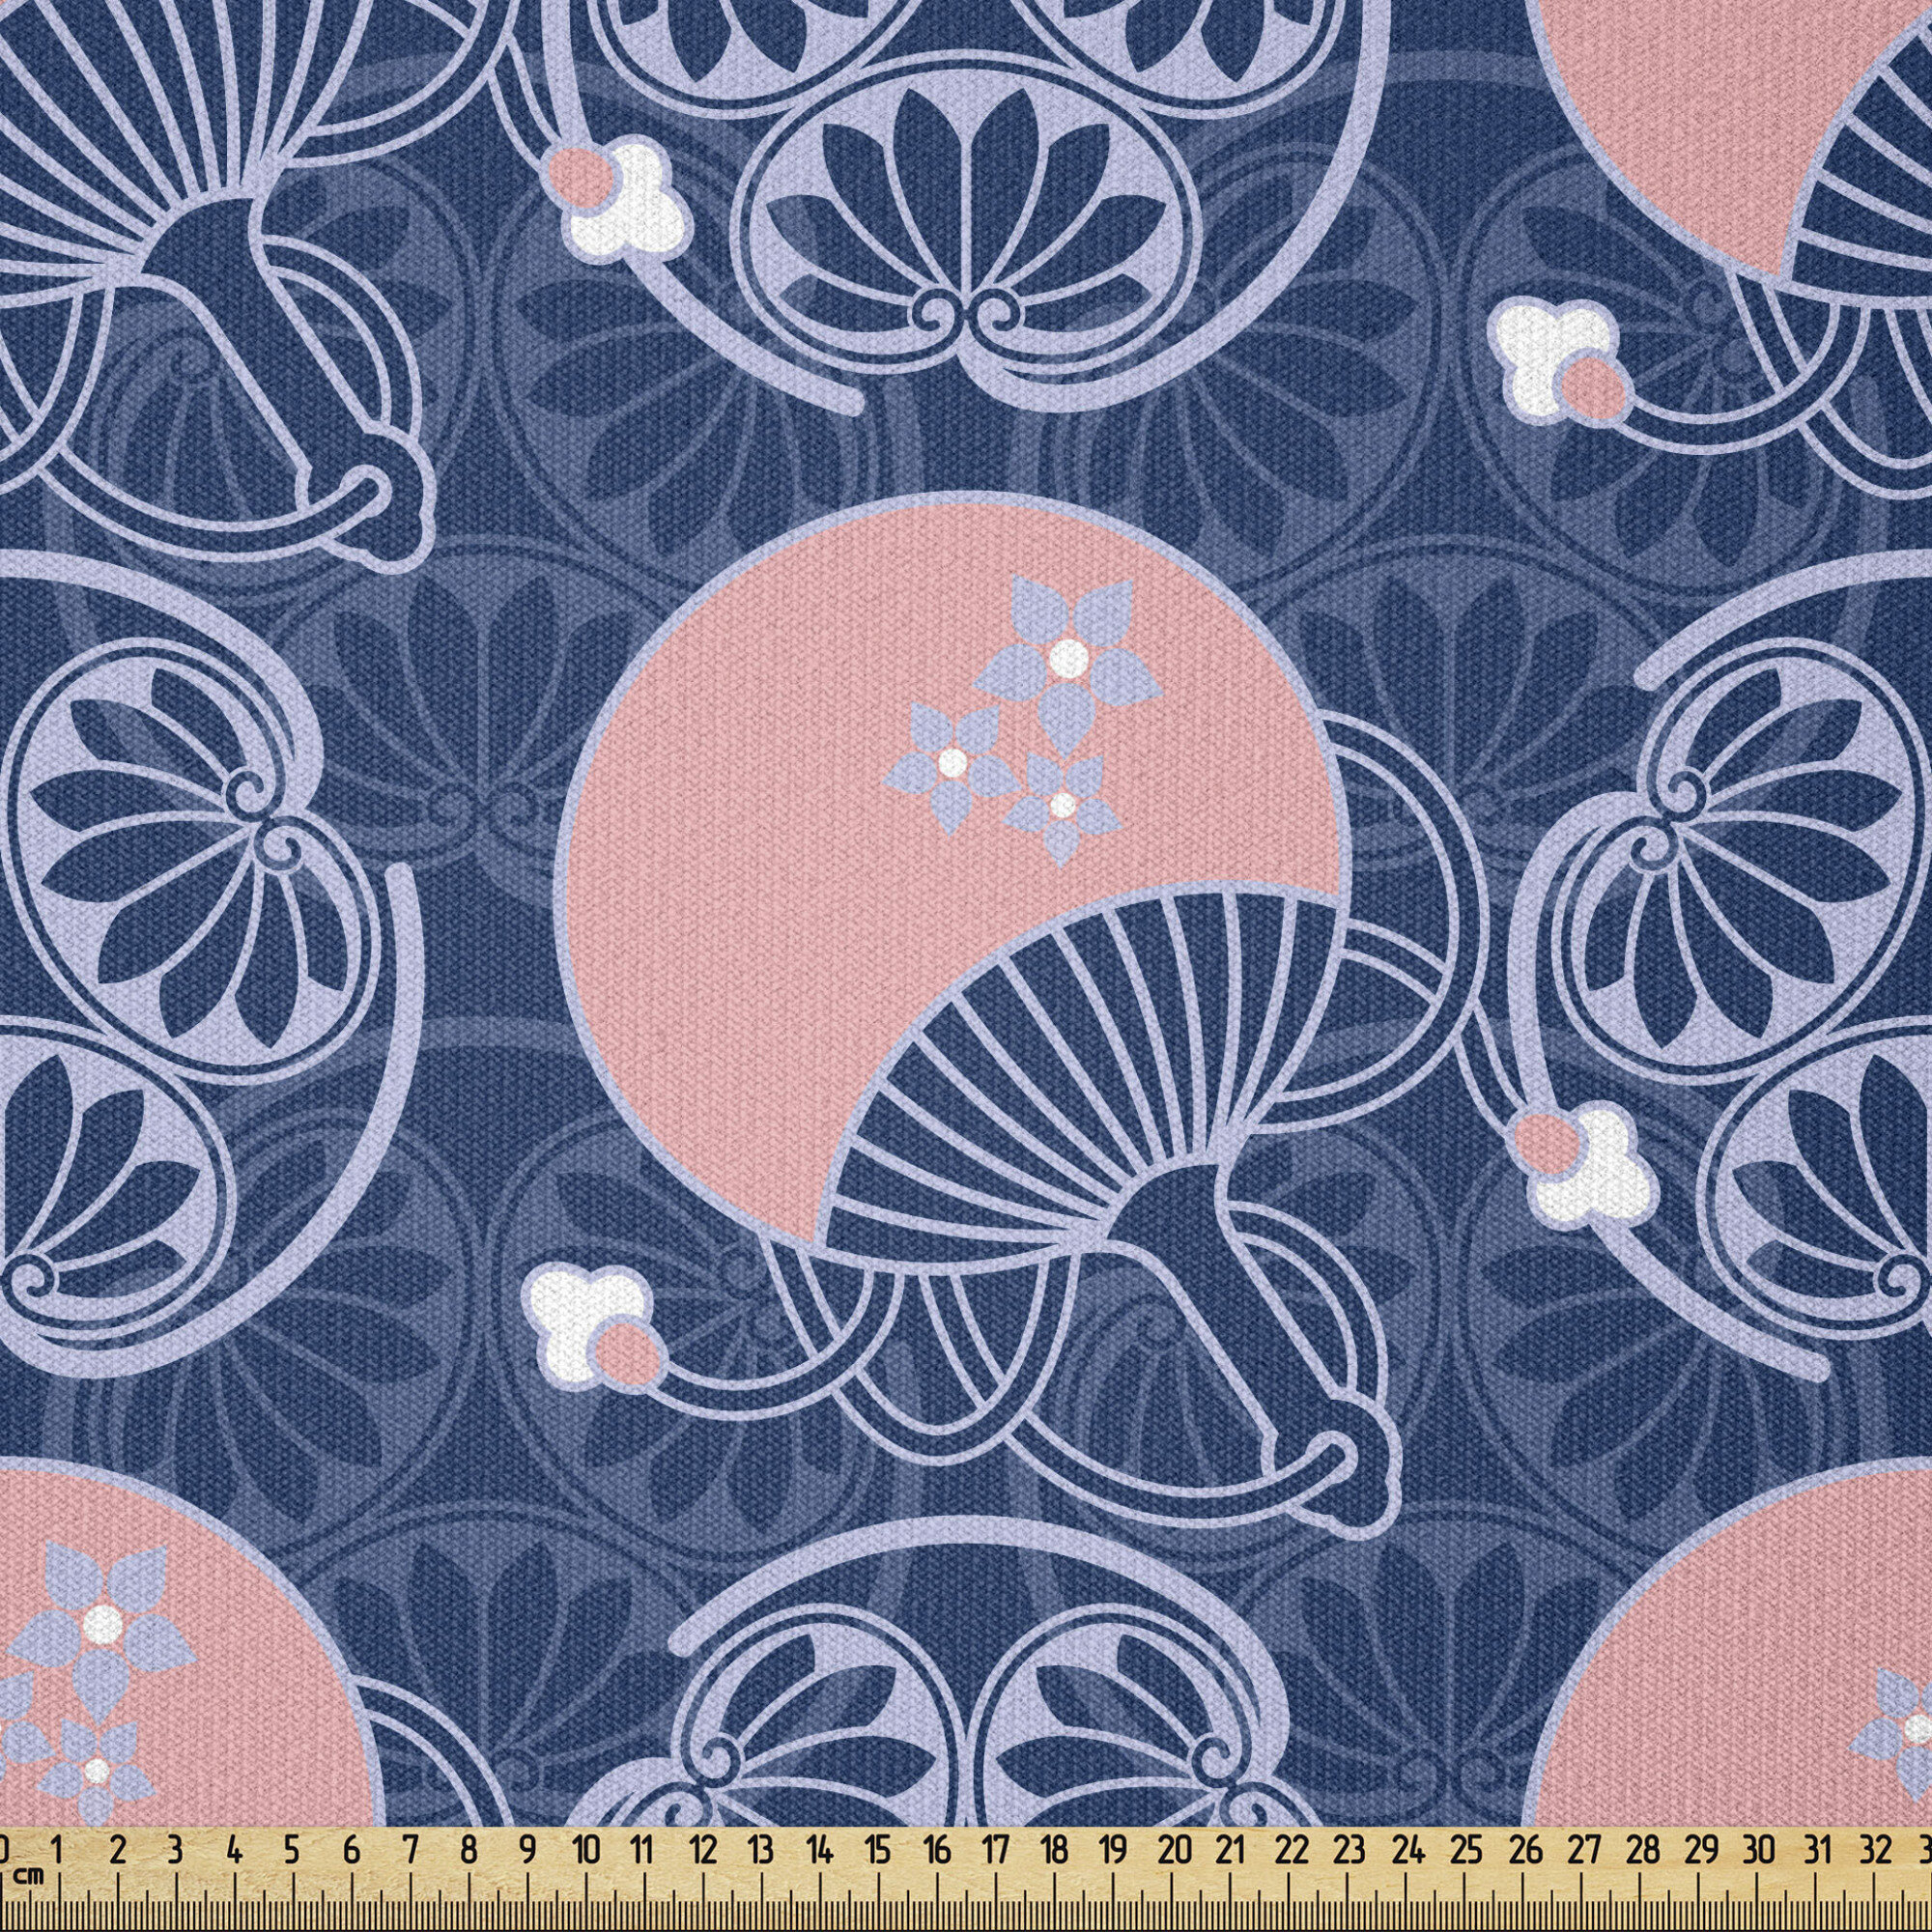 CraftDesignL Floral Cotton Embroidered Fabric,Japanese Fabric,Embroidered  Fabric,Quilting Fabric,Designer Fabric,Fabric by Yard,Linen Cotton Fabric